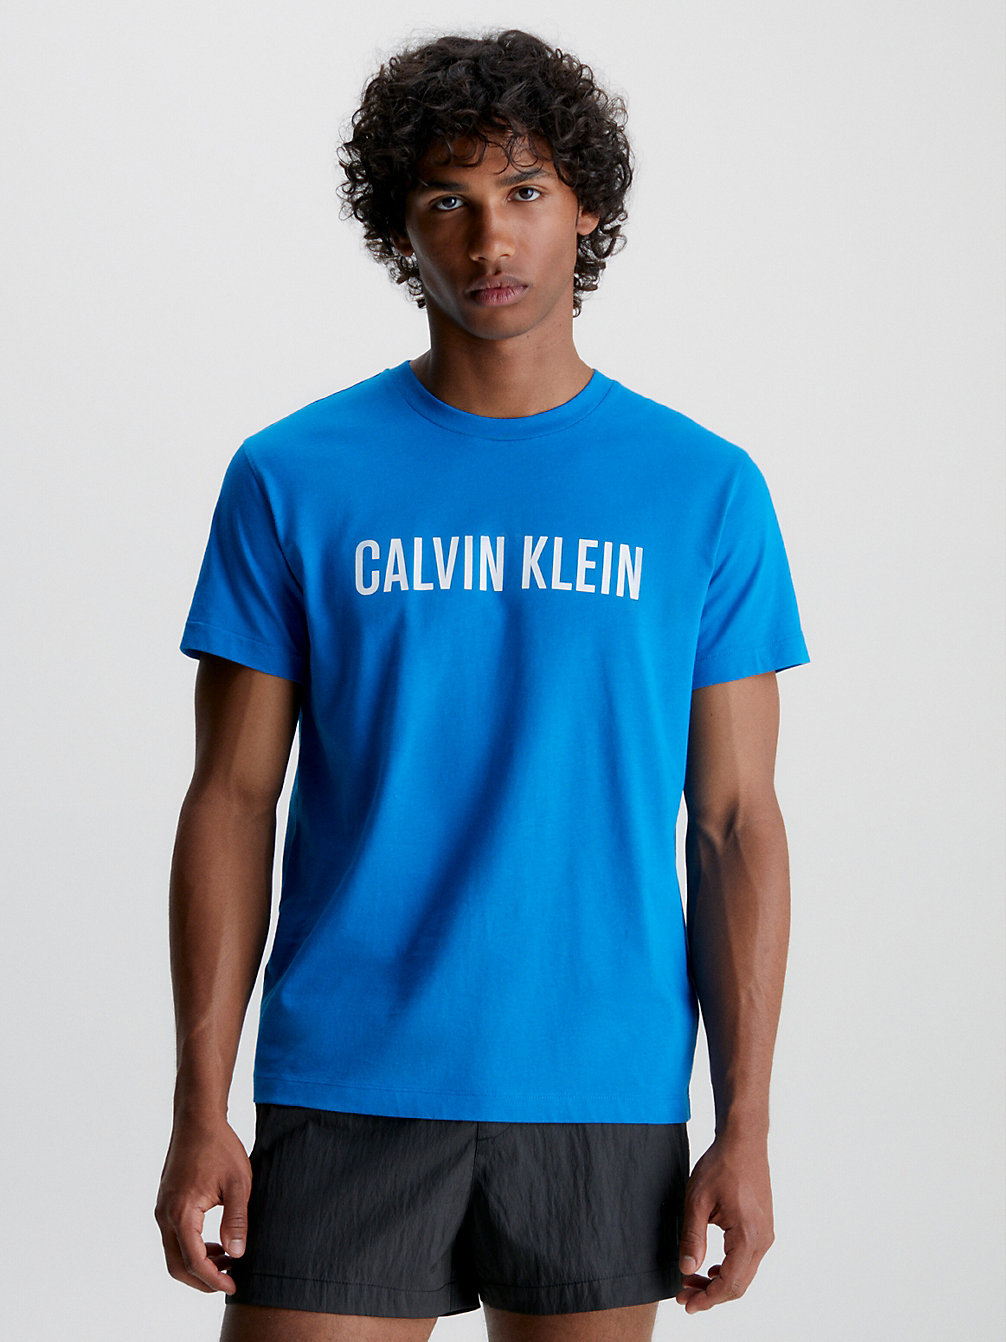 UNITY BLUE > T-Shirt Plażowy - Intense Power > undefined Mężczyźni - Calvin Klein